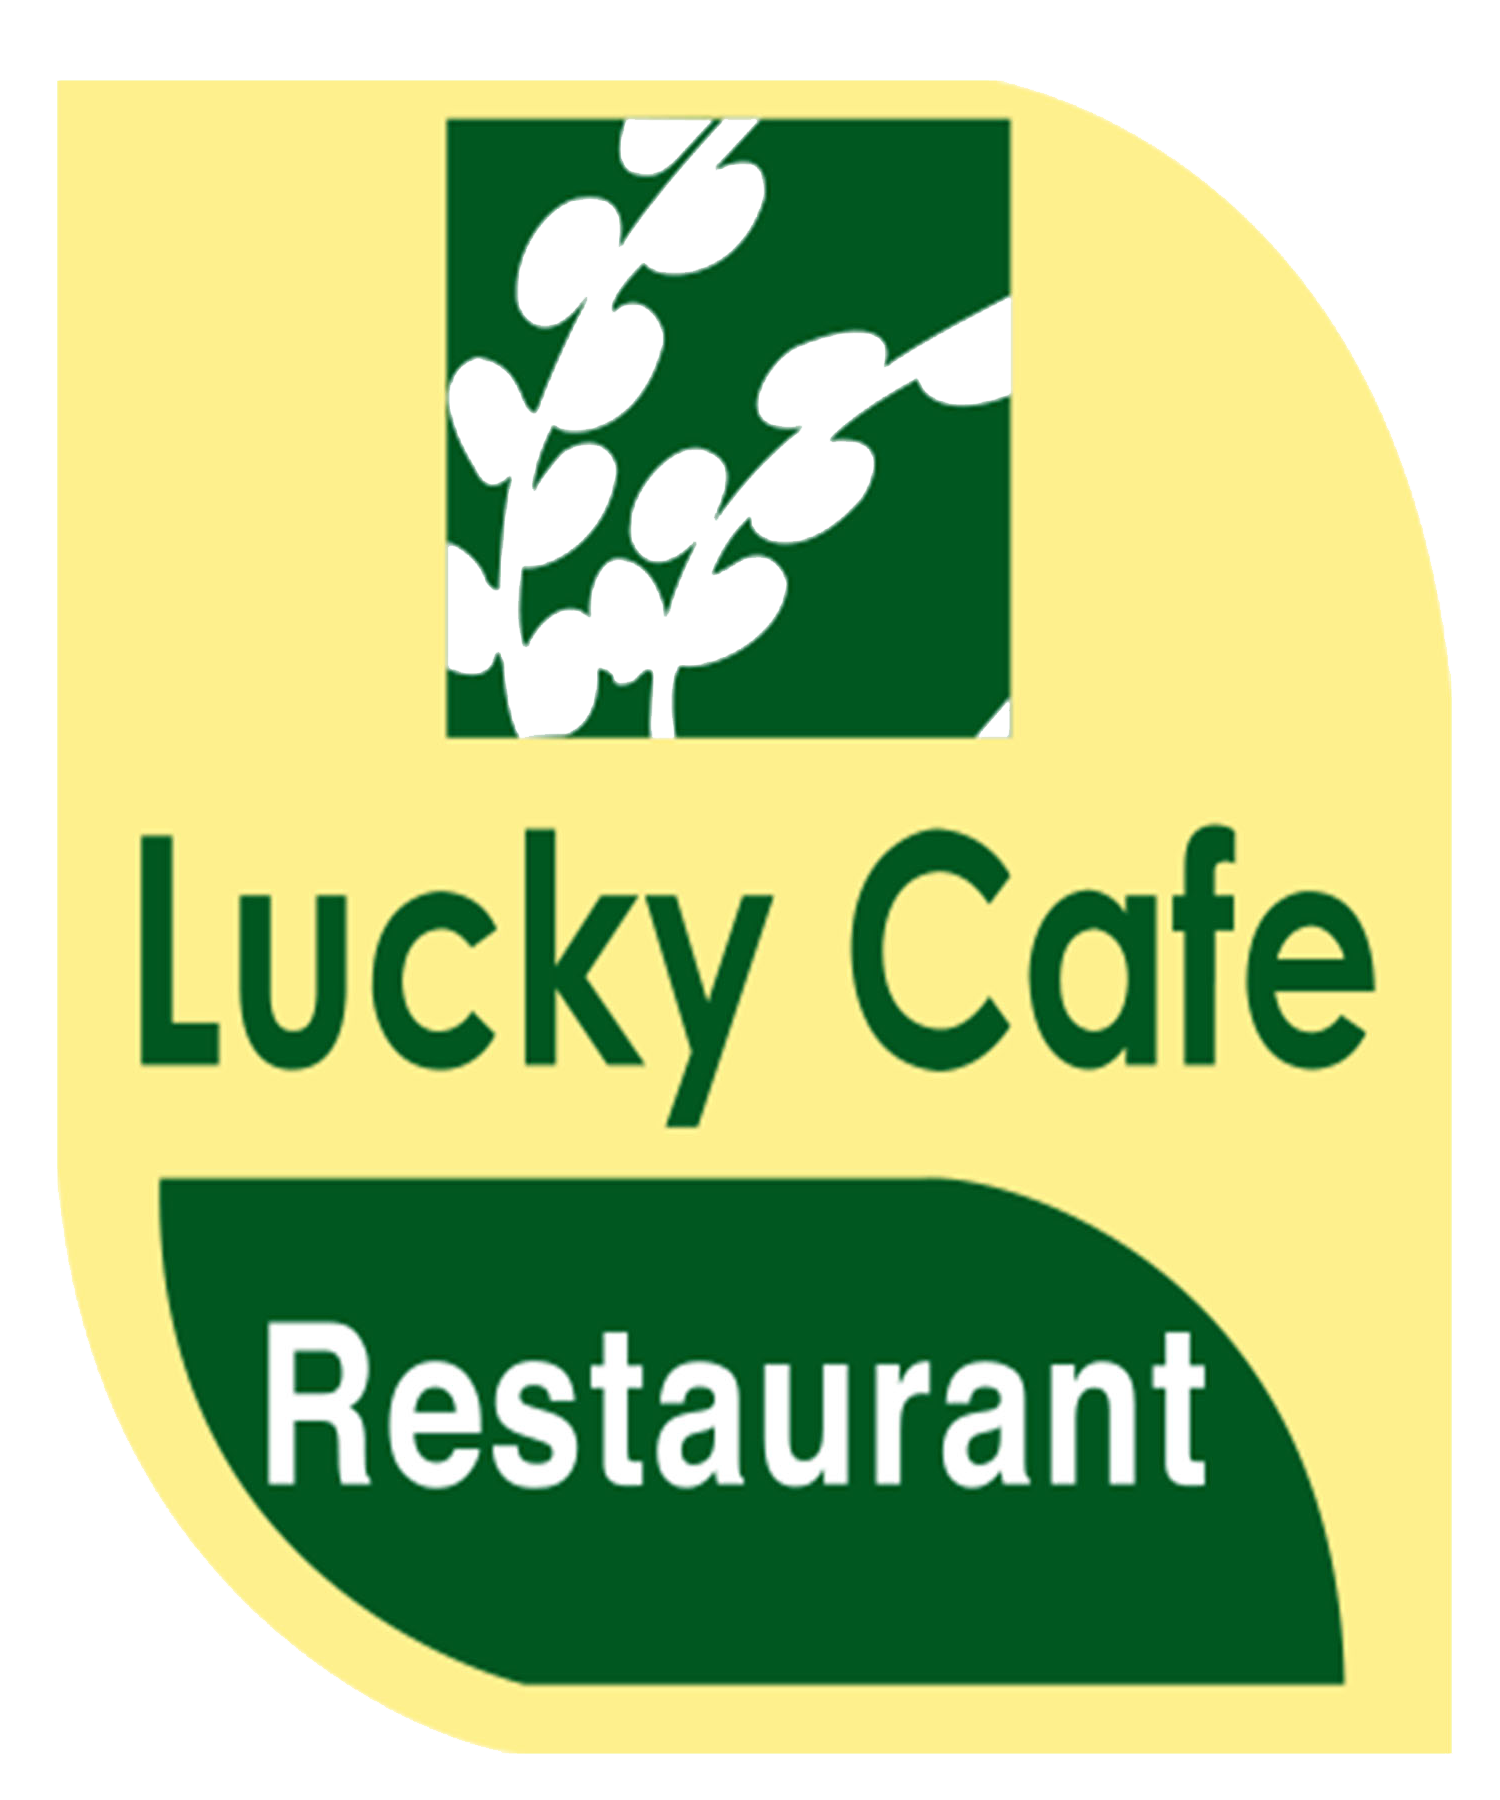 Lucky Cafes